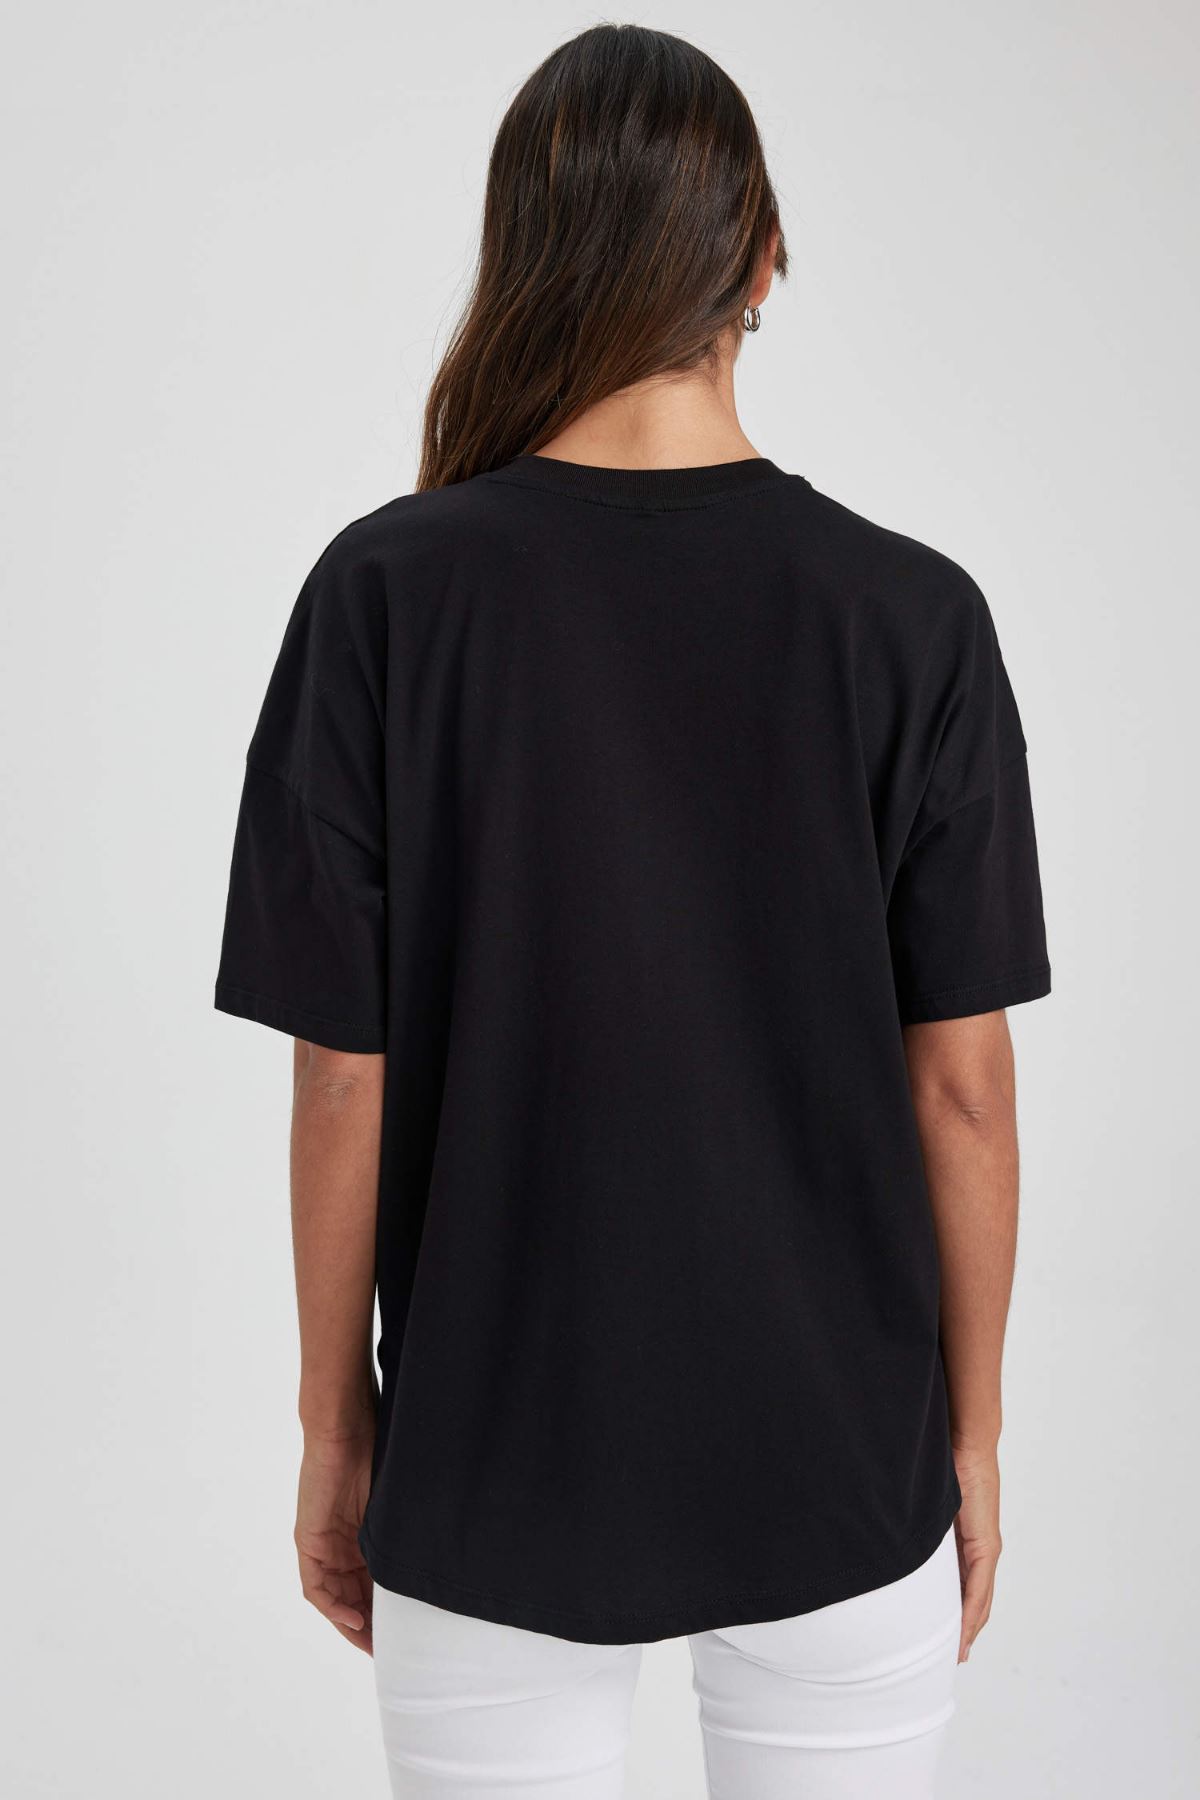 Defacto Kadın Siyah Tişört - W9570AZ/BK81